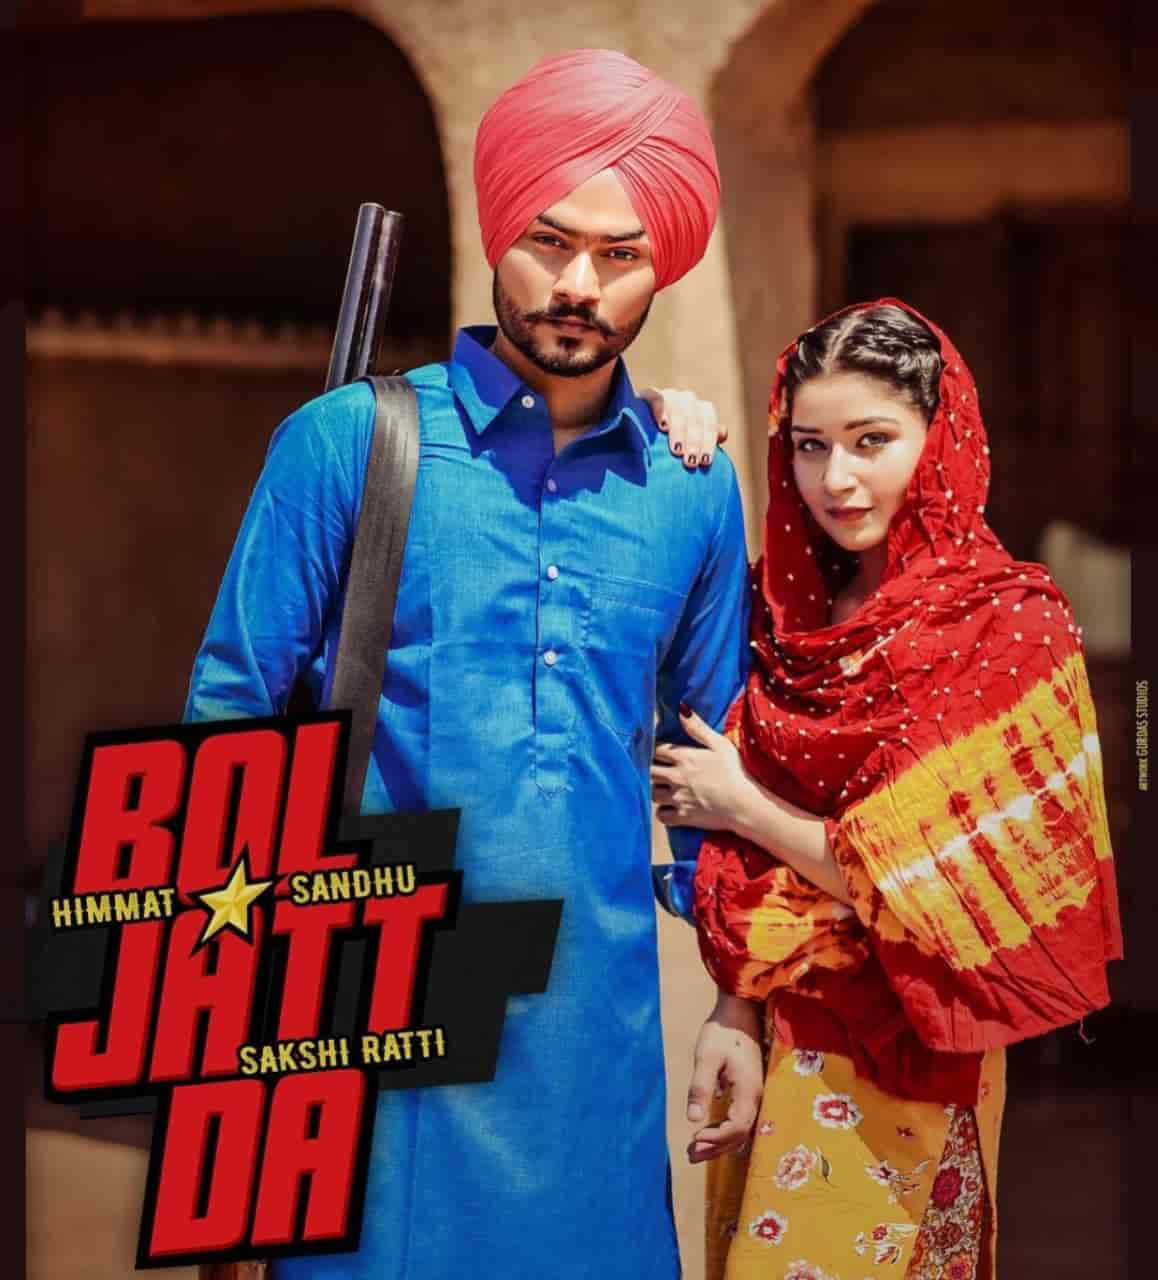 Bol Jatt Da Punjabi Song Image Features Himmat Sandhu